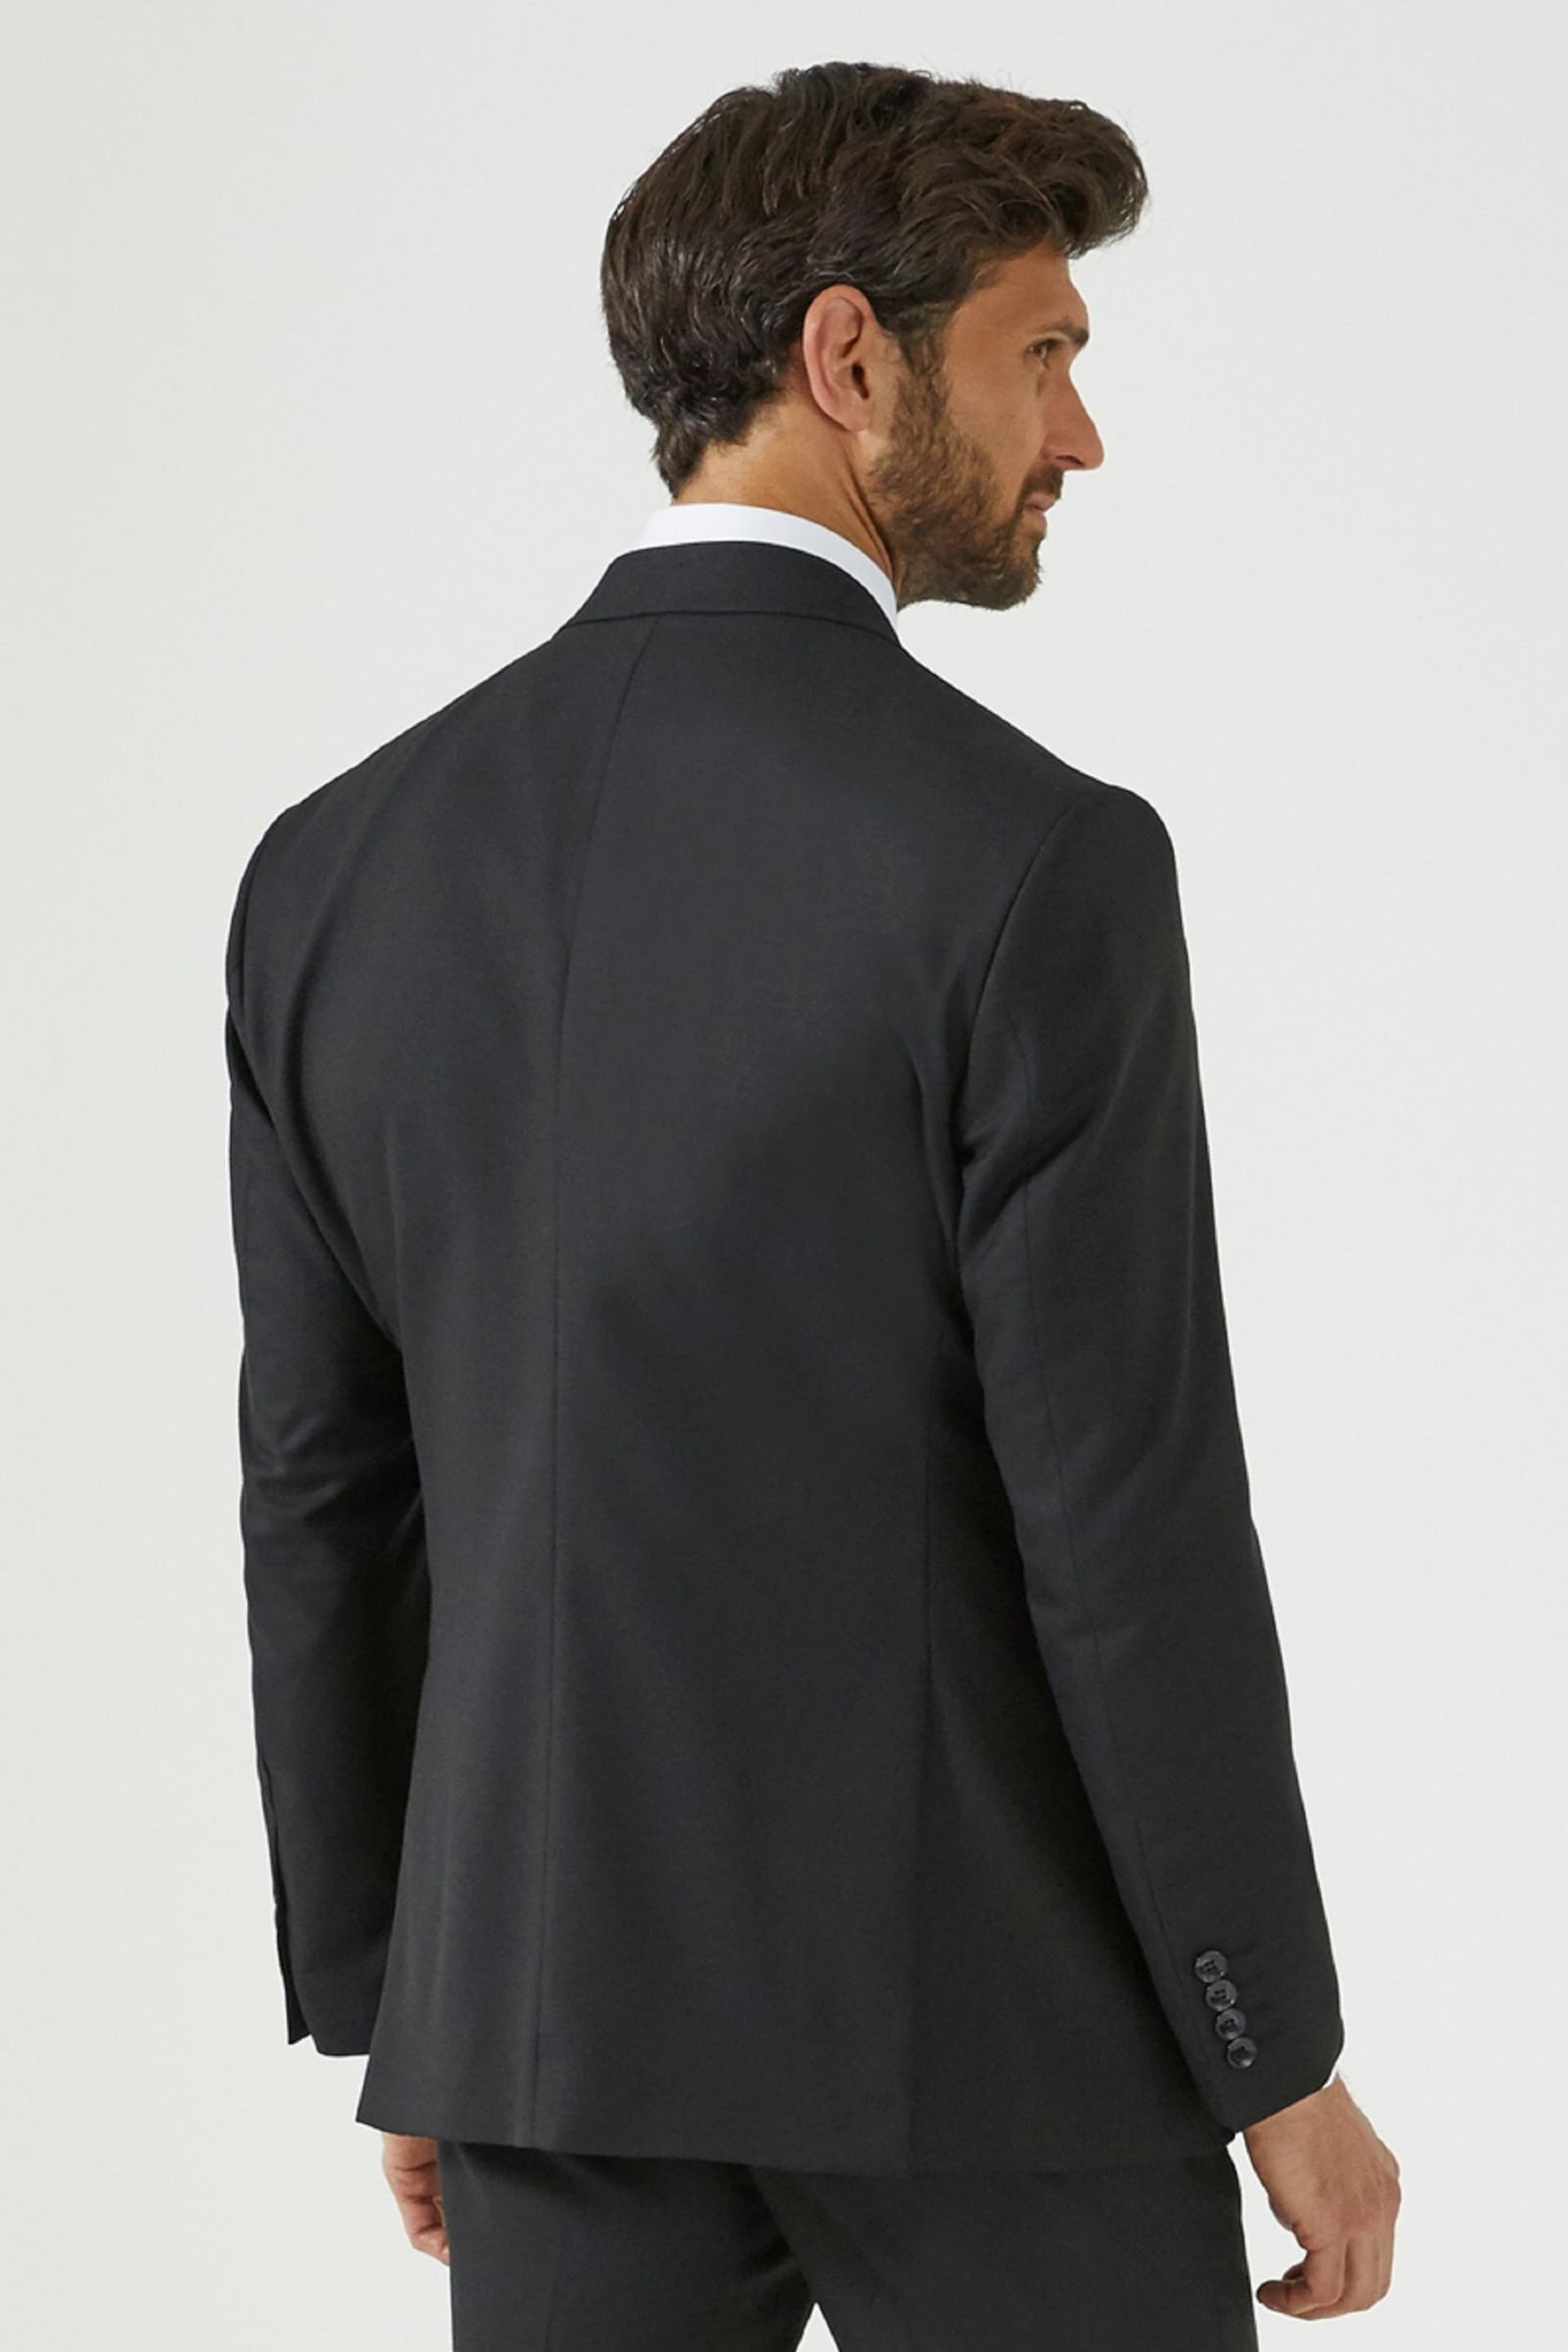 Skopes Montague Black Tailored Fit Suit Jacket - Image 3 of 6